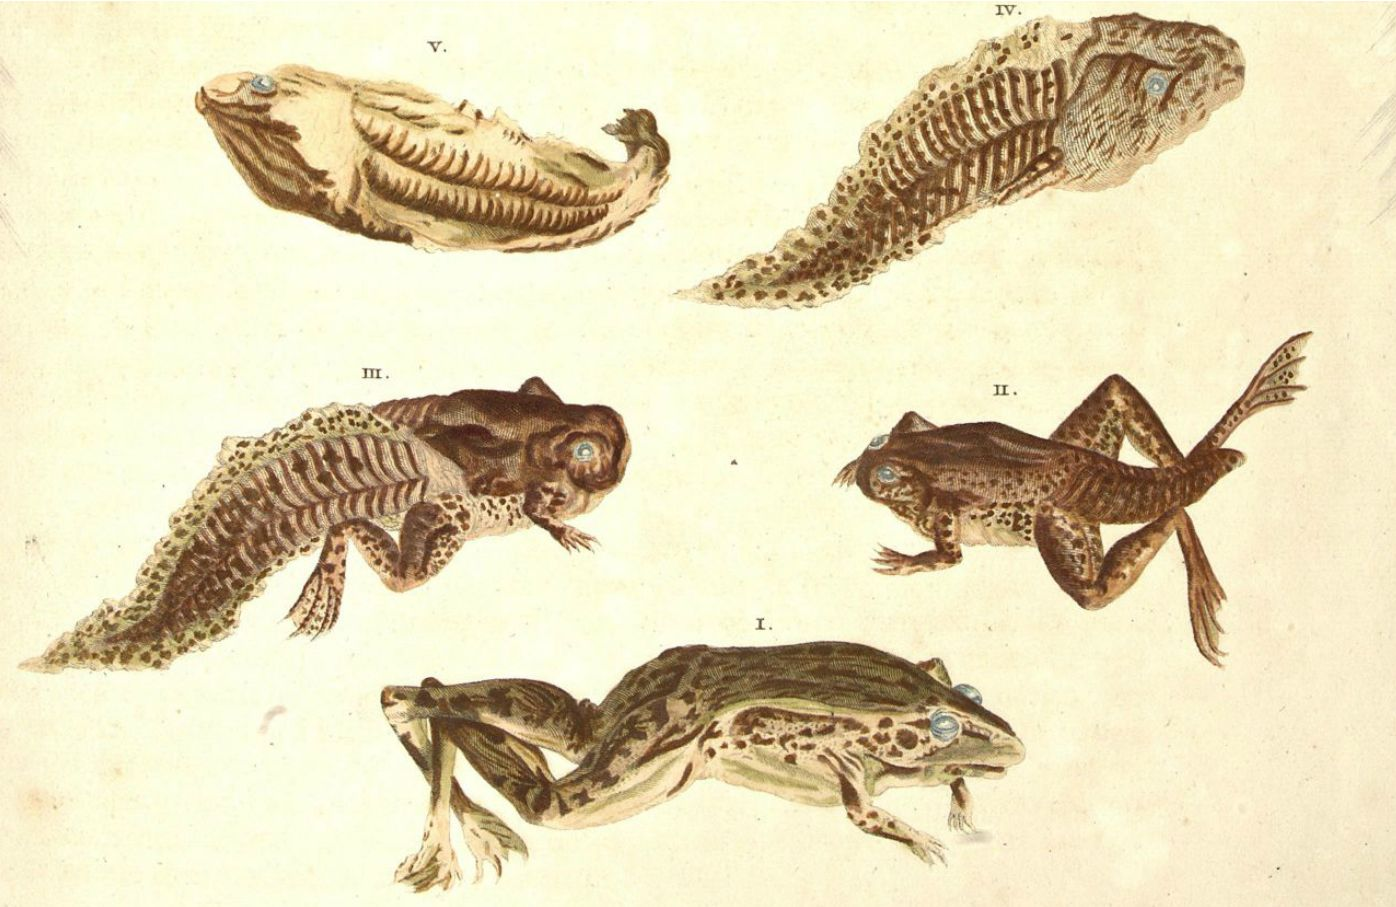 Frog life cycle from Metamorphosis insectorum Surinamensium